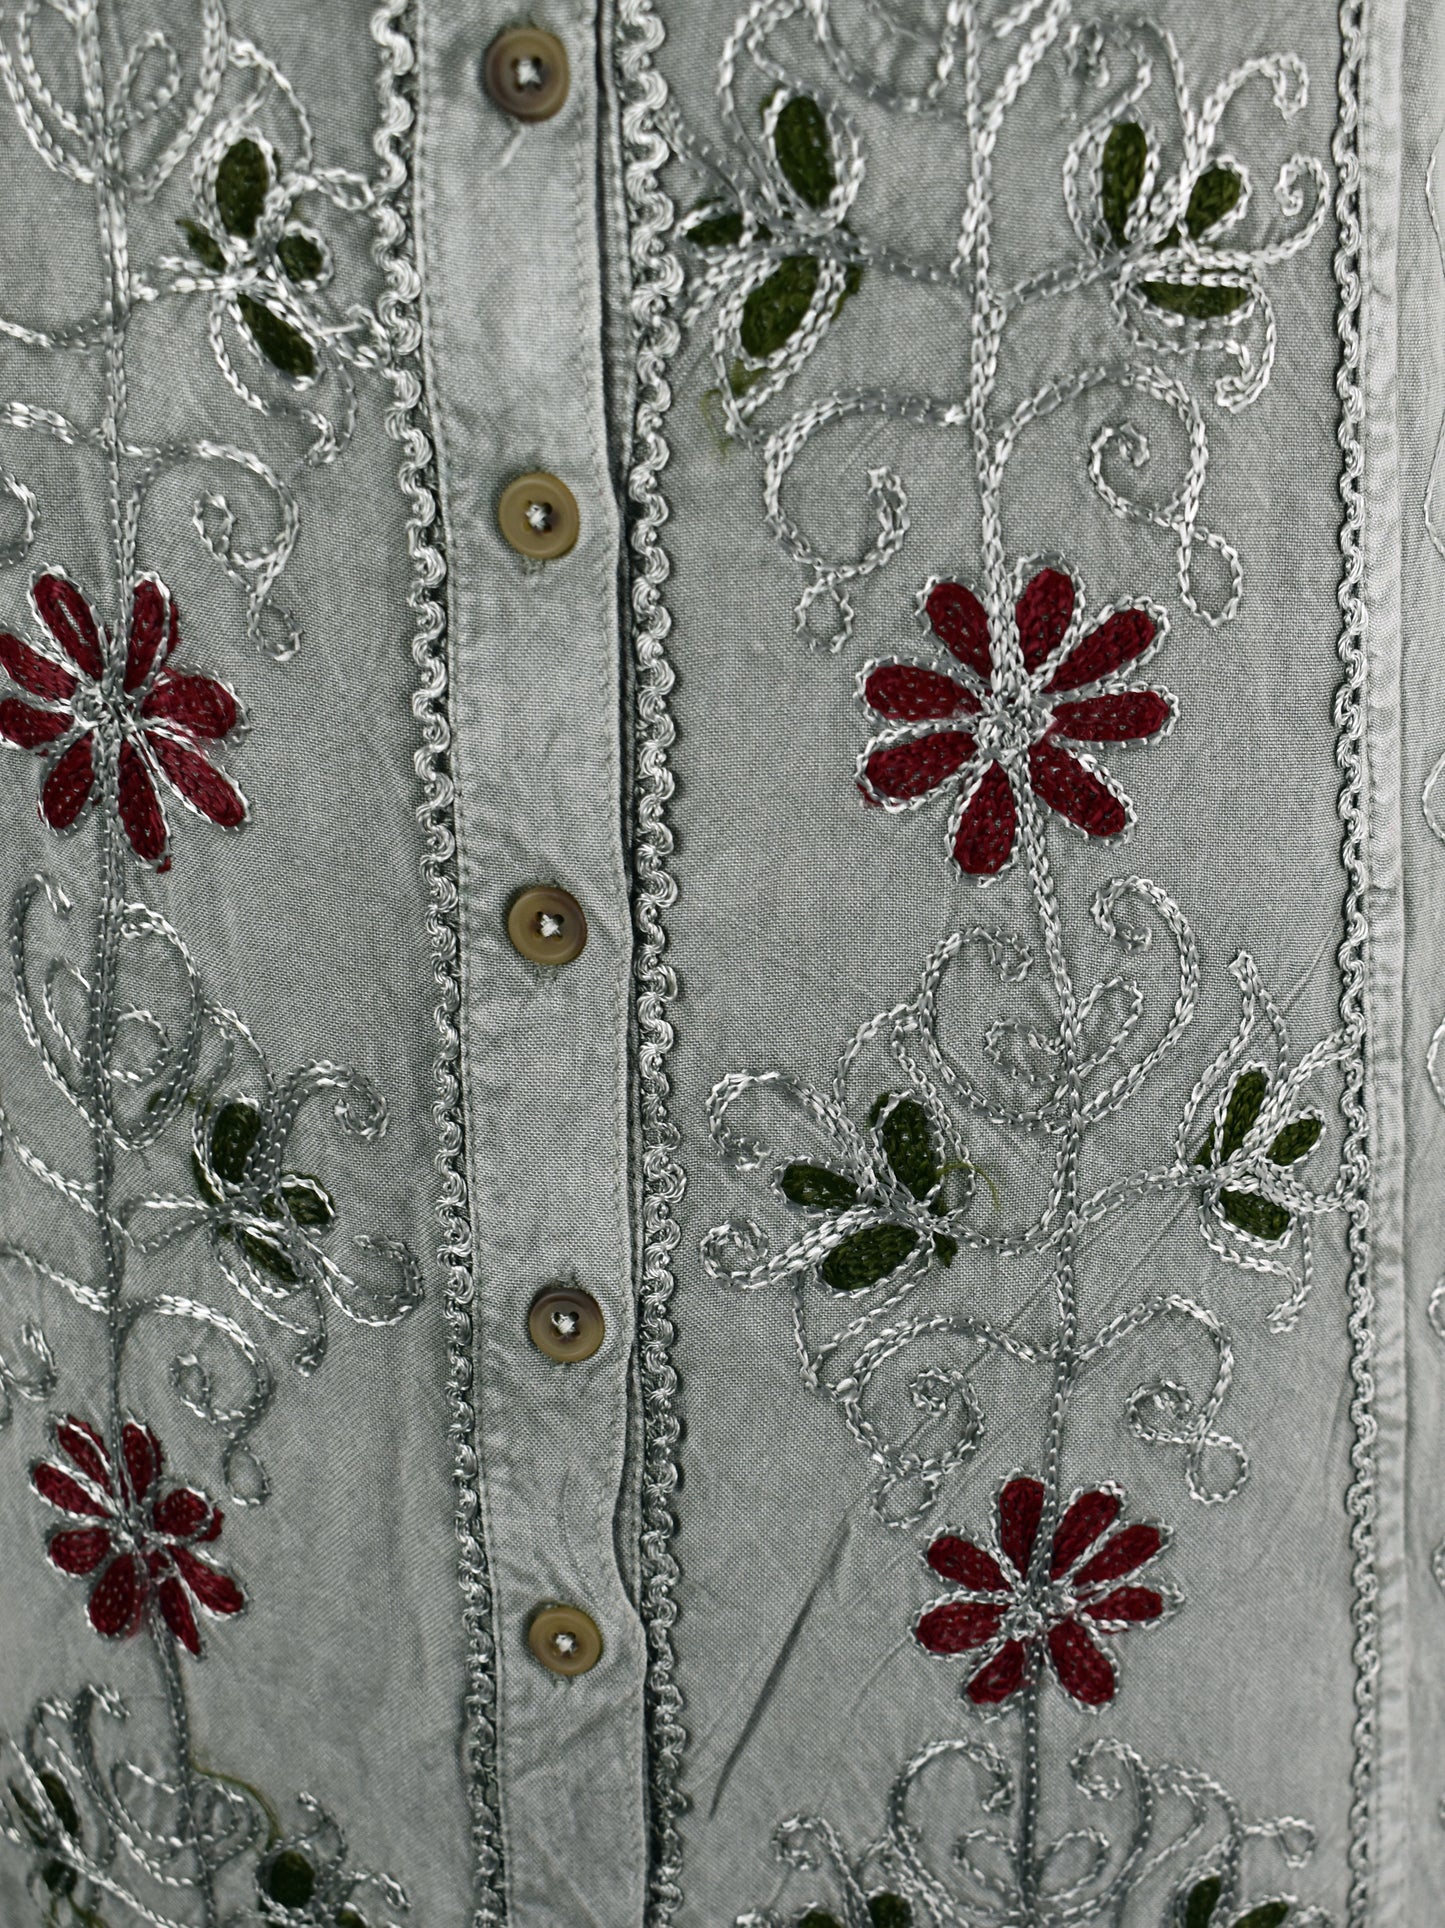 Embroidered Viscose Dress